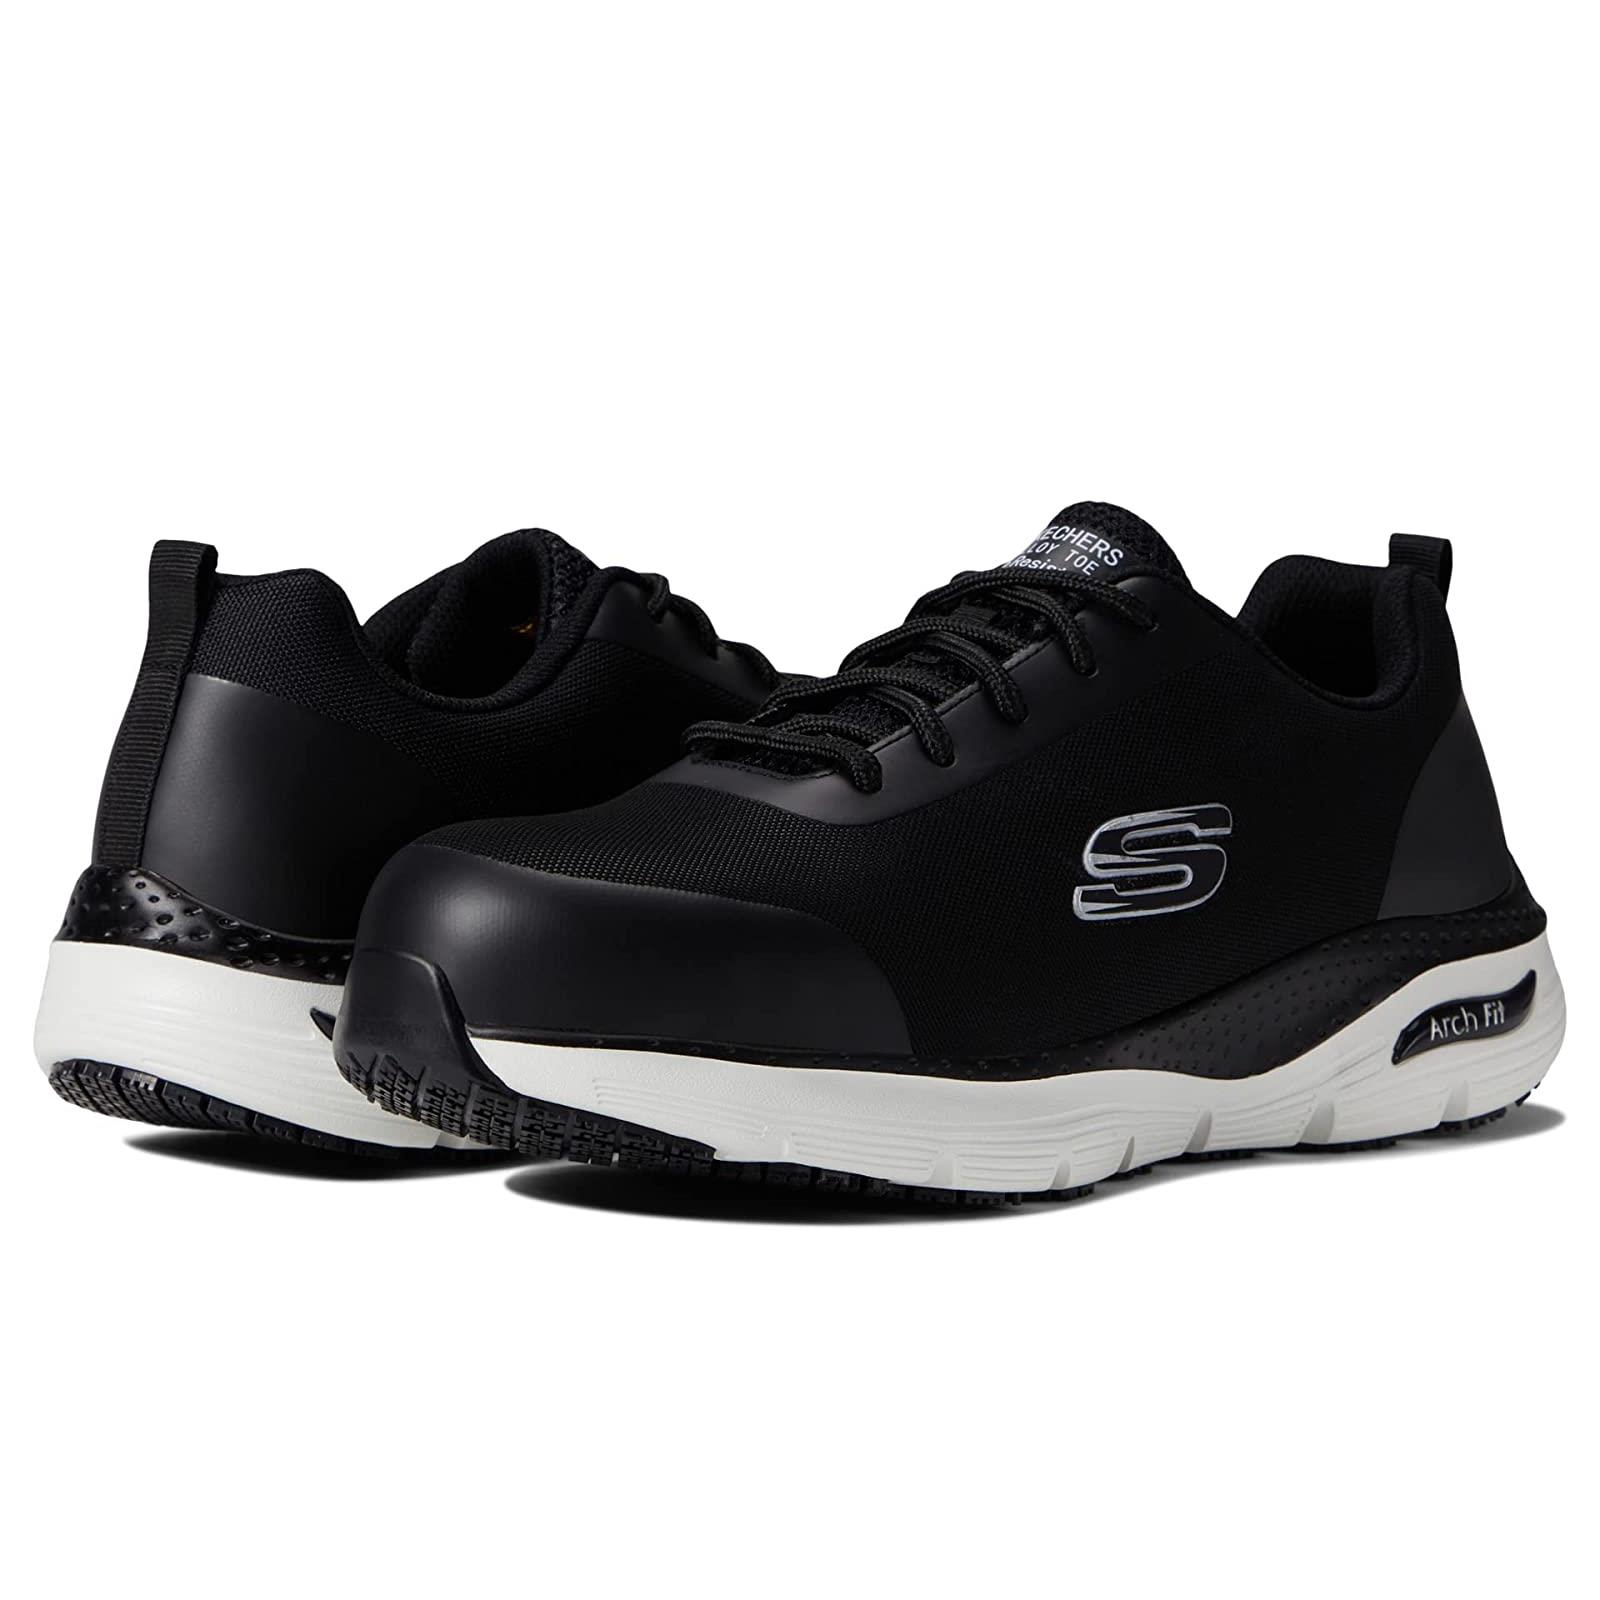 Man`s Shoes Skechers Work Arch Fit SR - Ringstap Alloy Toe Black/White